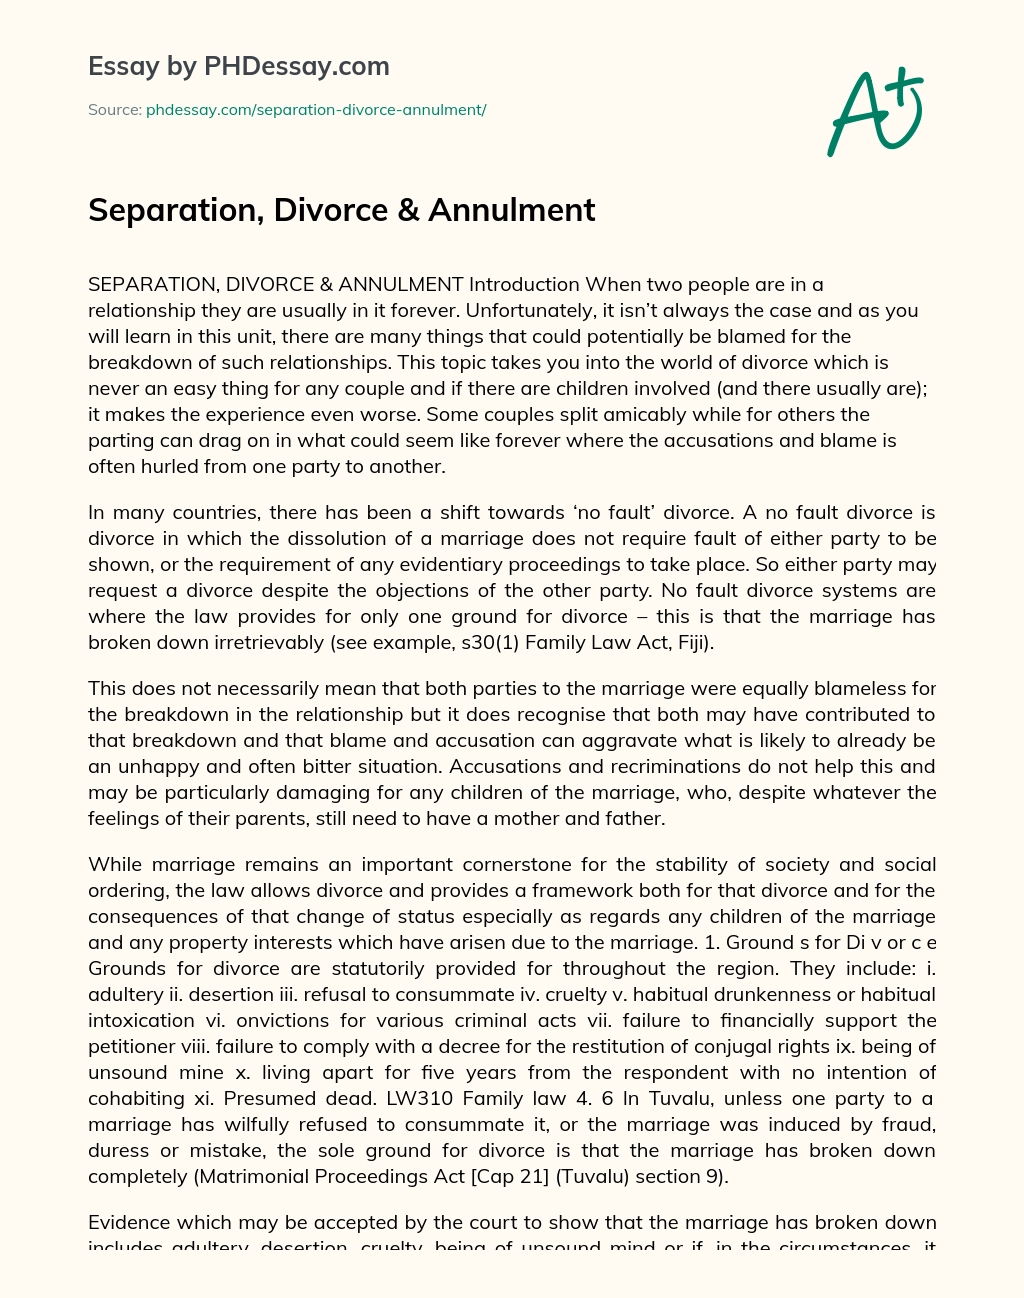 Separation, Divorce & Annulment essay